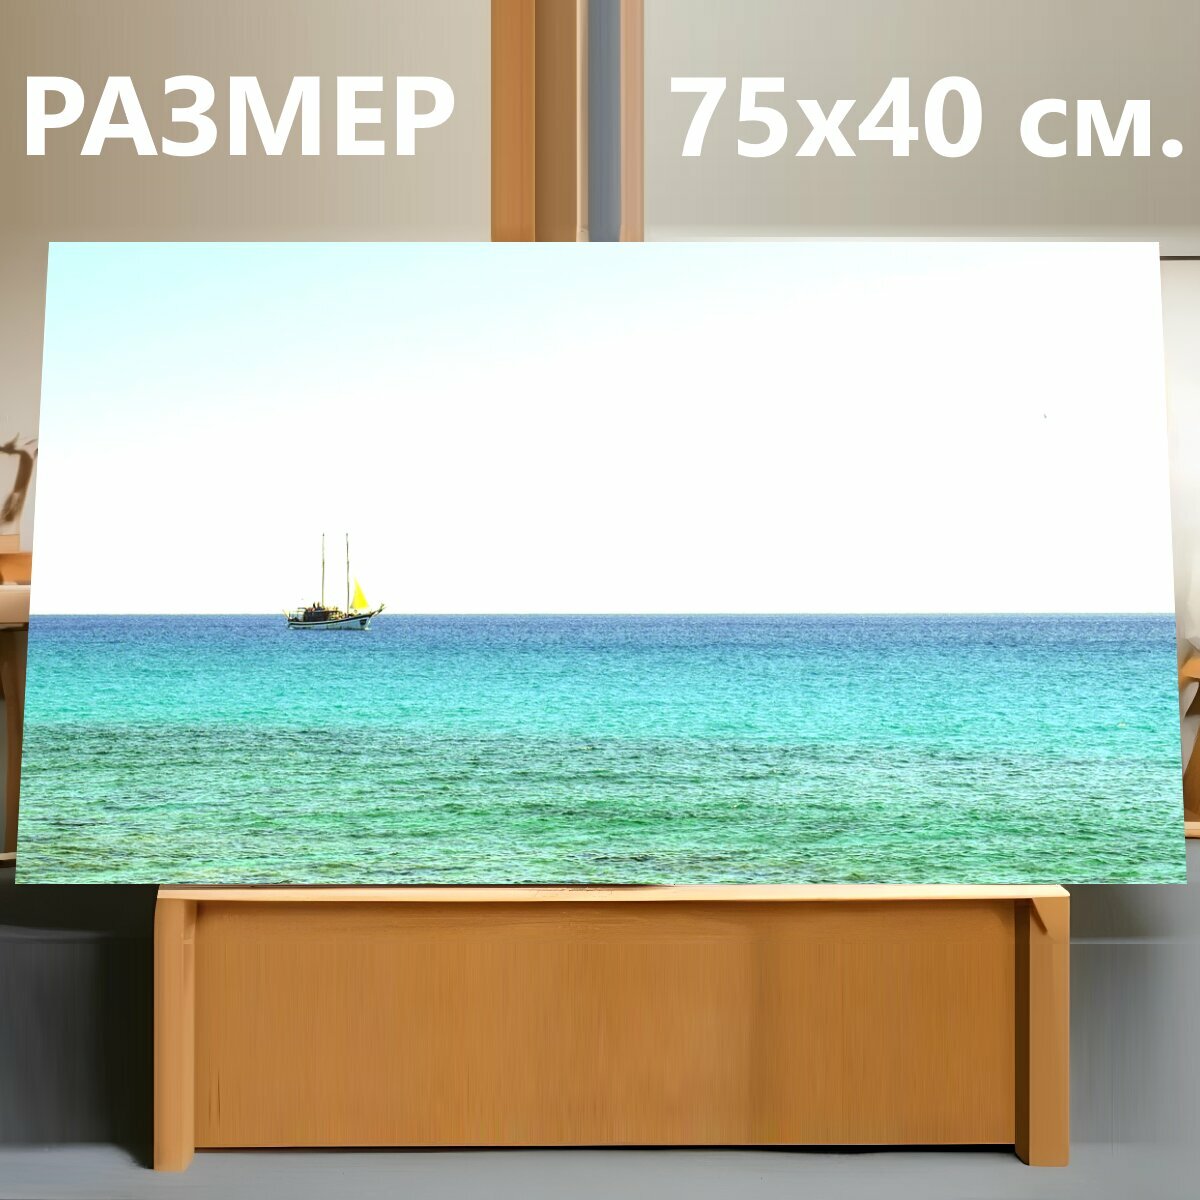 Картина на холсте "Лодка, море, горизонт" на подрамнике 75х40 см. для интерьера